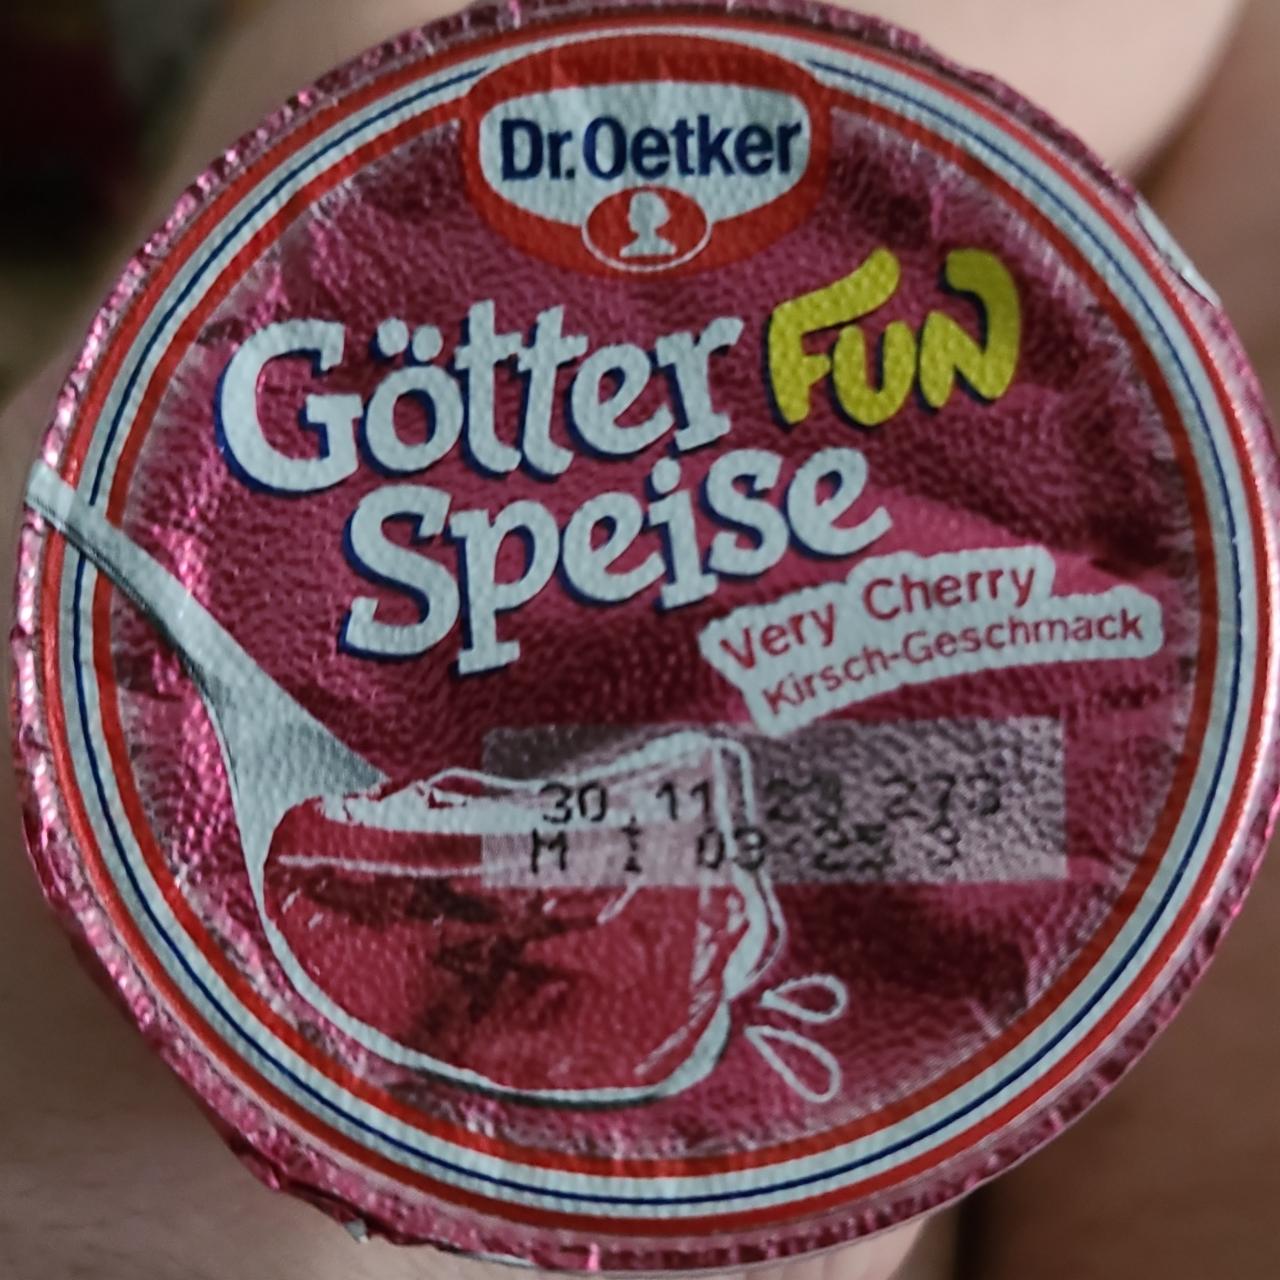 Фото - Желе со вкусом вишни Götter fun speise Very Cherry Dr. Oetker